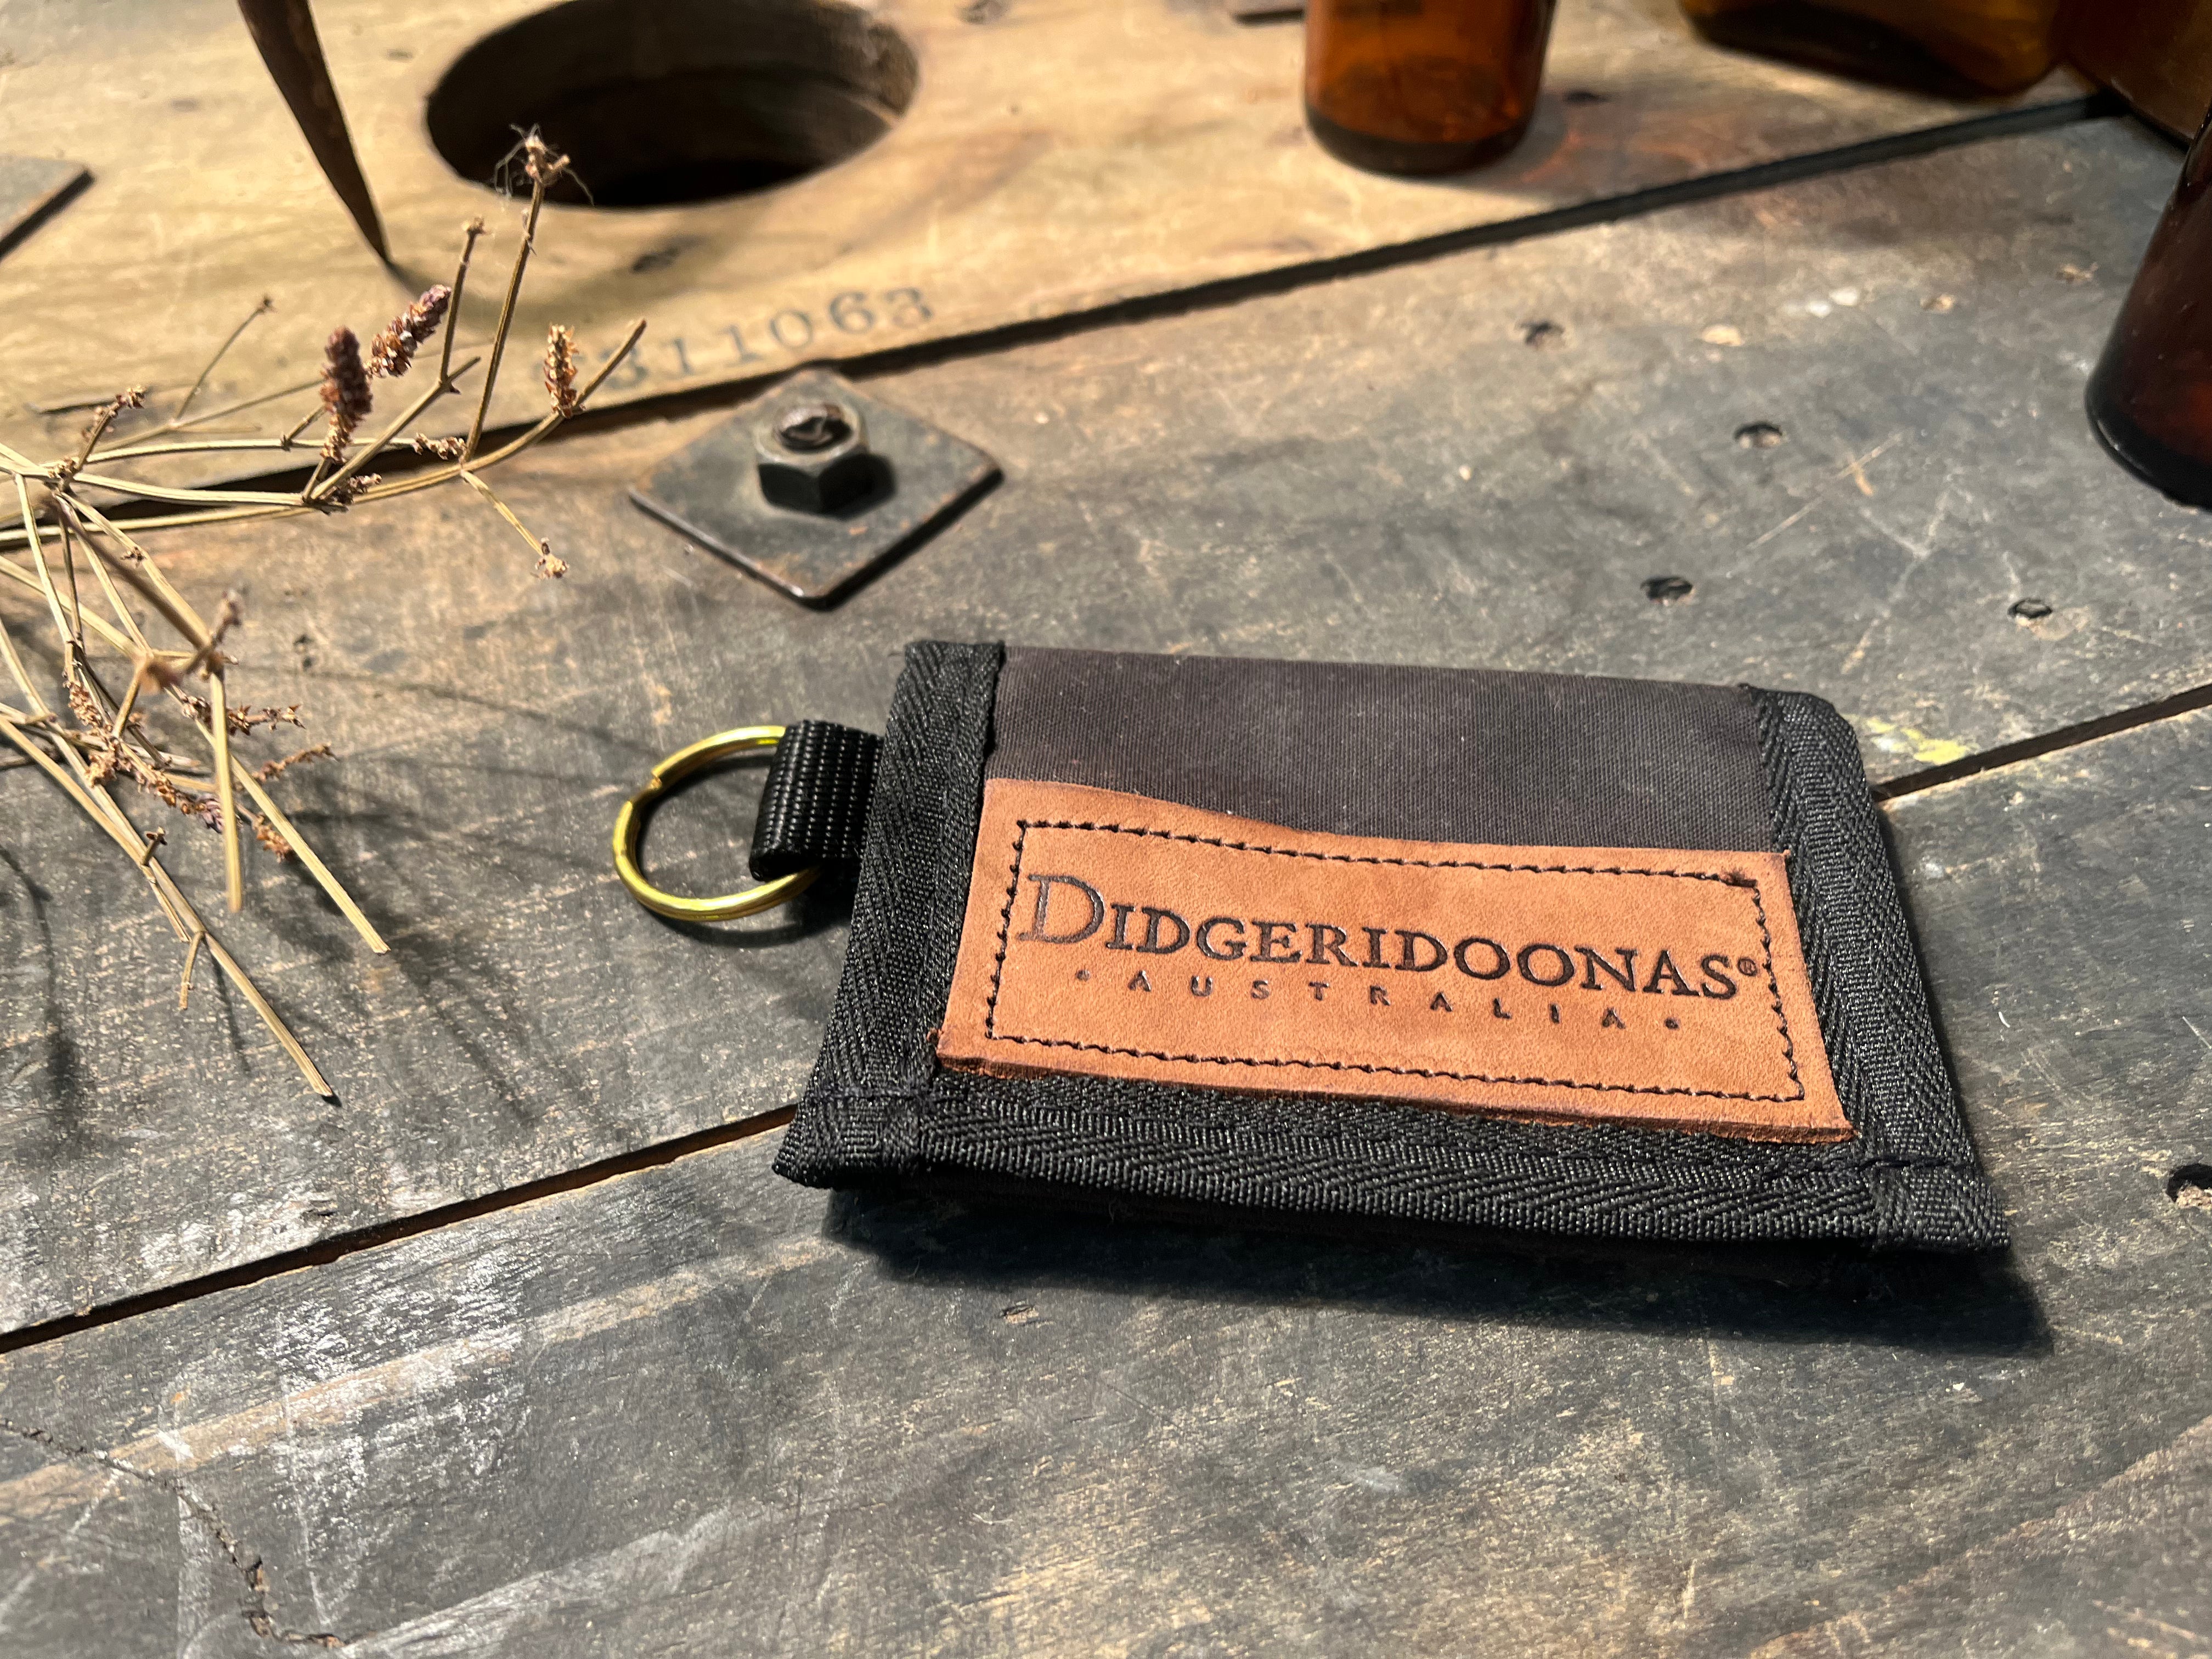 Original DIDGERIDOONAS Keys & Coins pouch